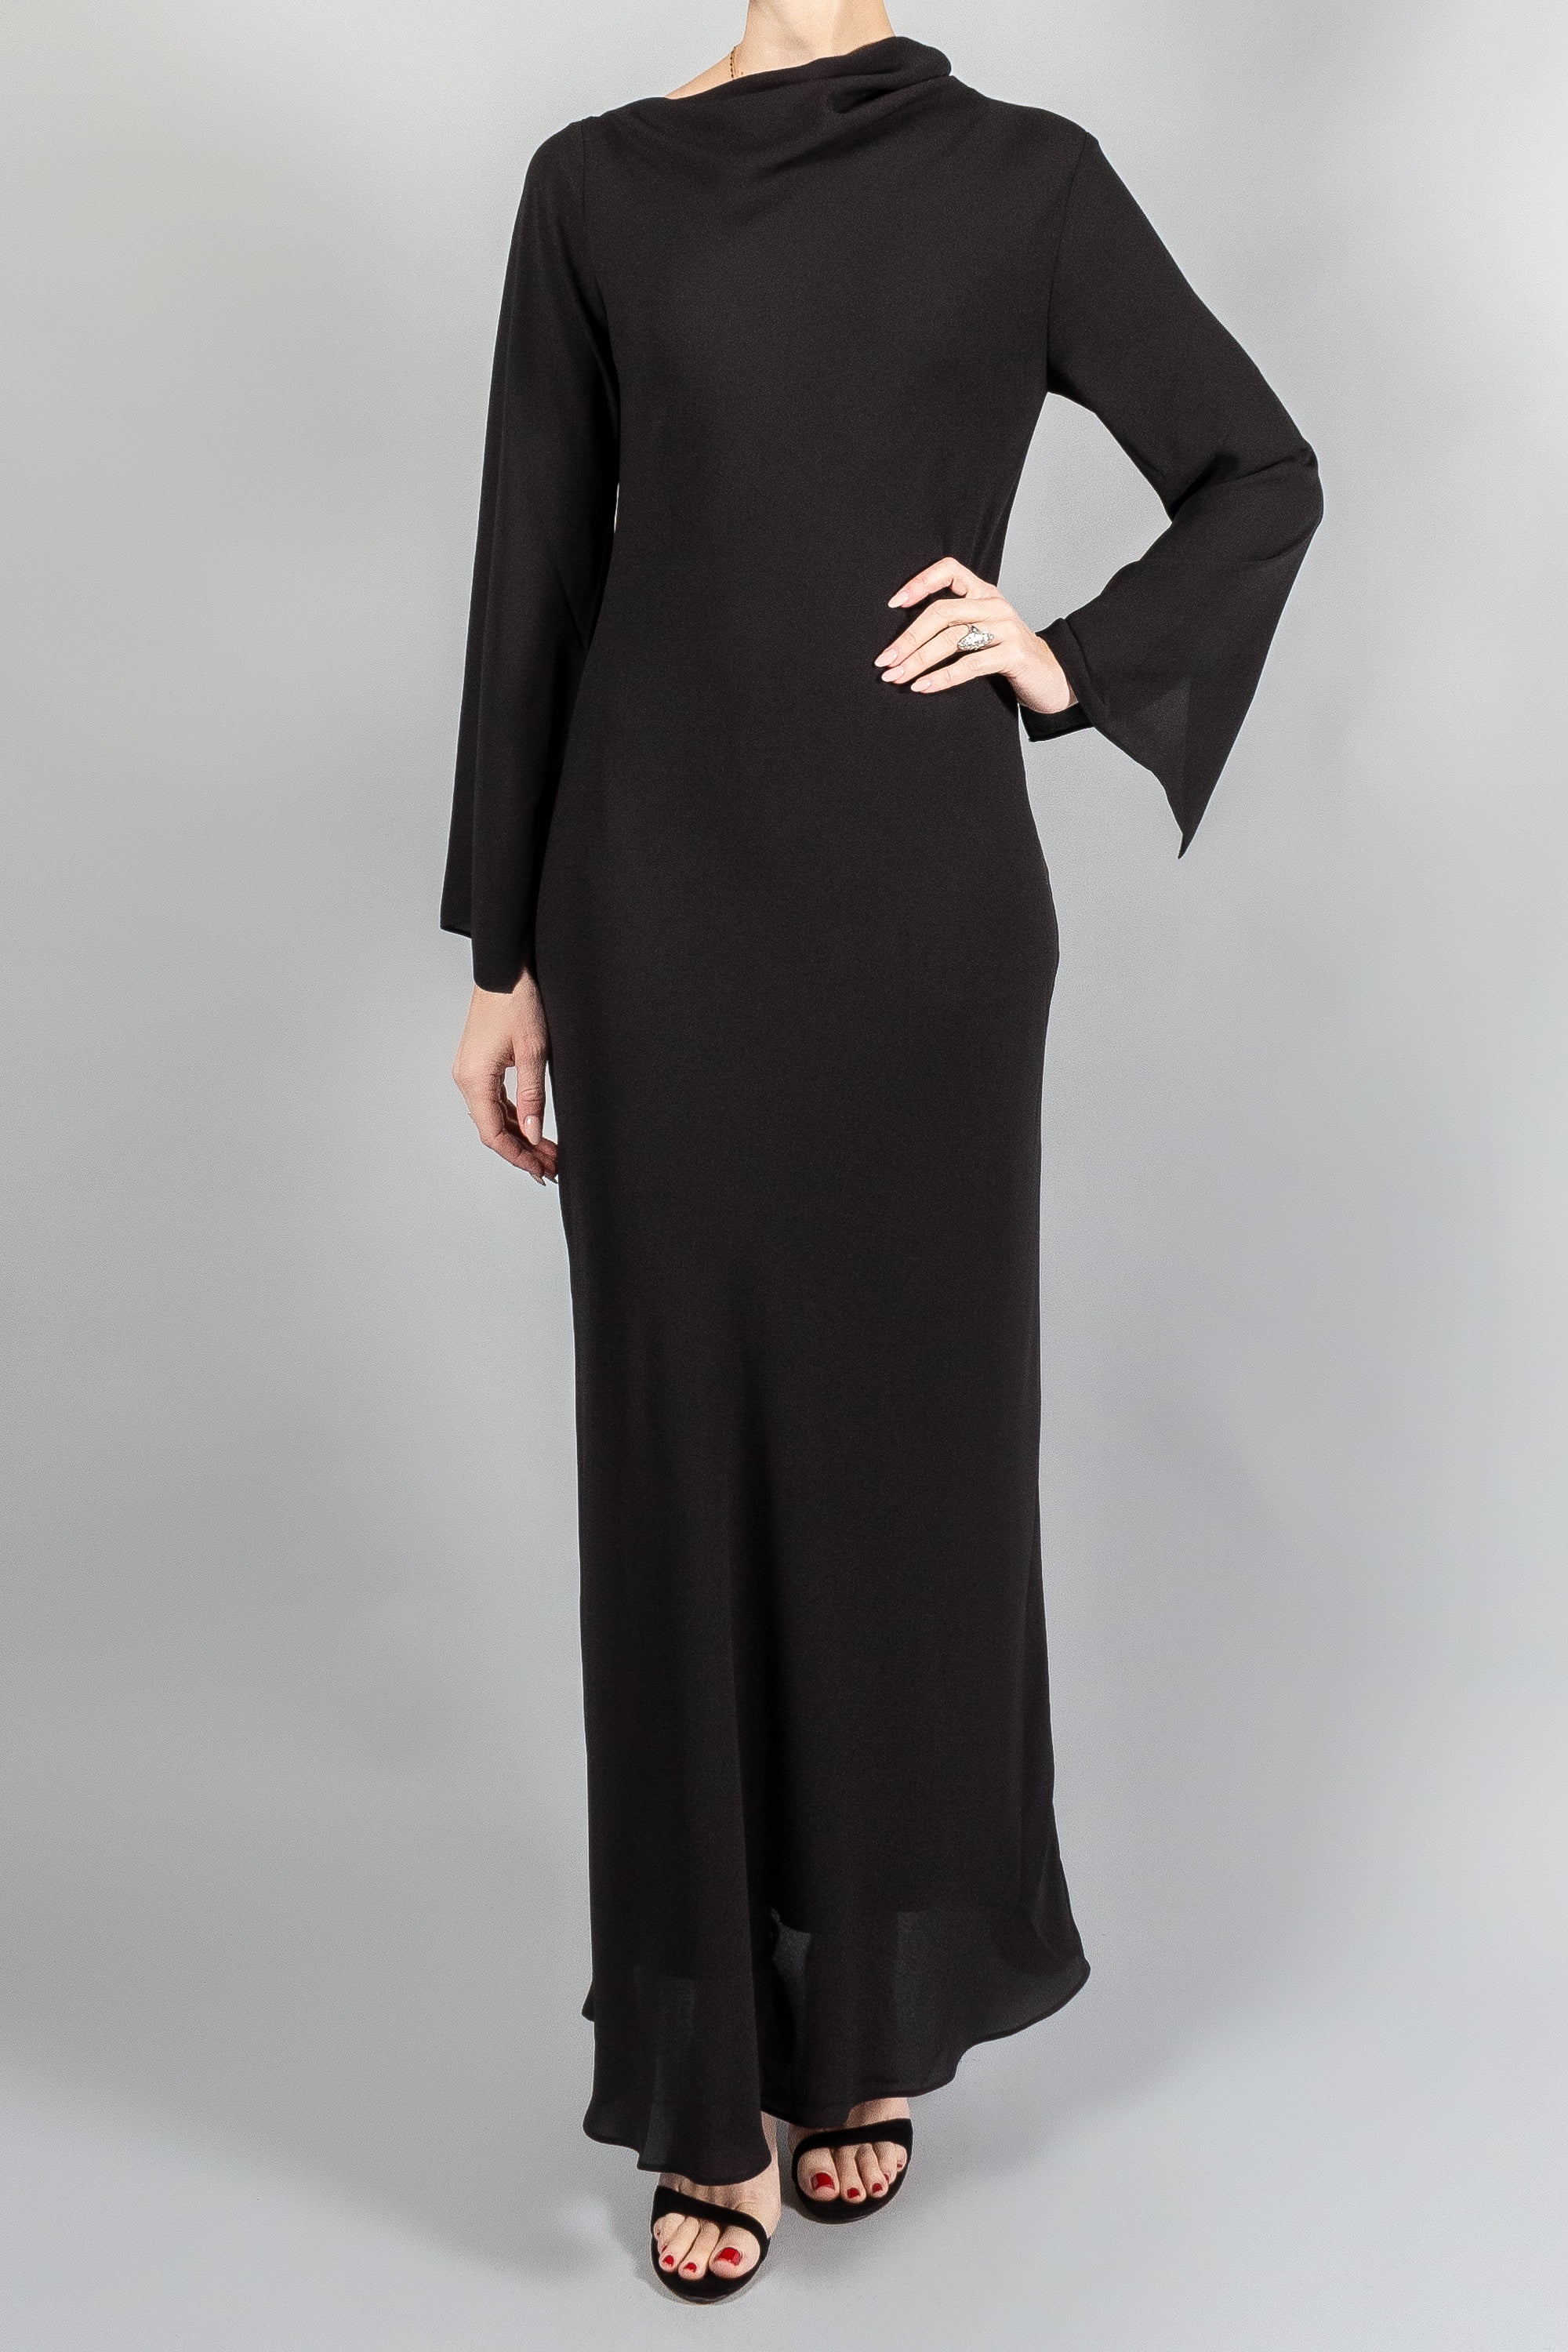 Kallmeyer Grace Bias Dress-Dresses-Misch-Boutique-Vancouver-Canada-misch.ca